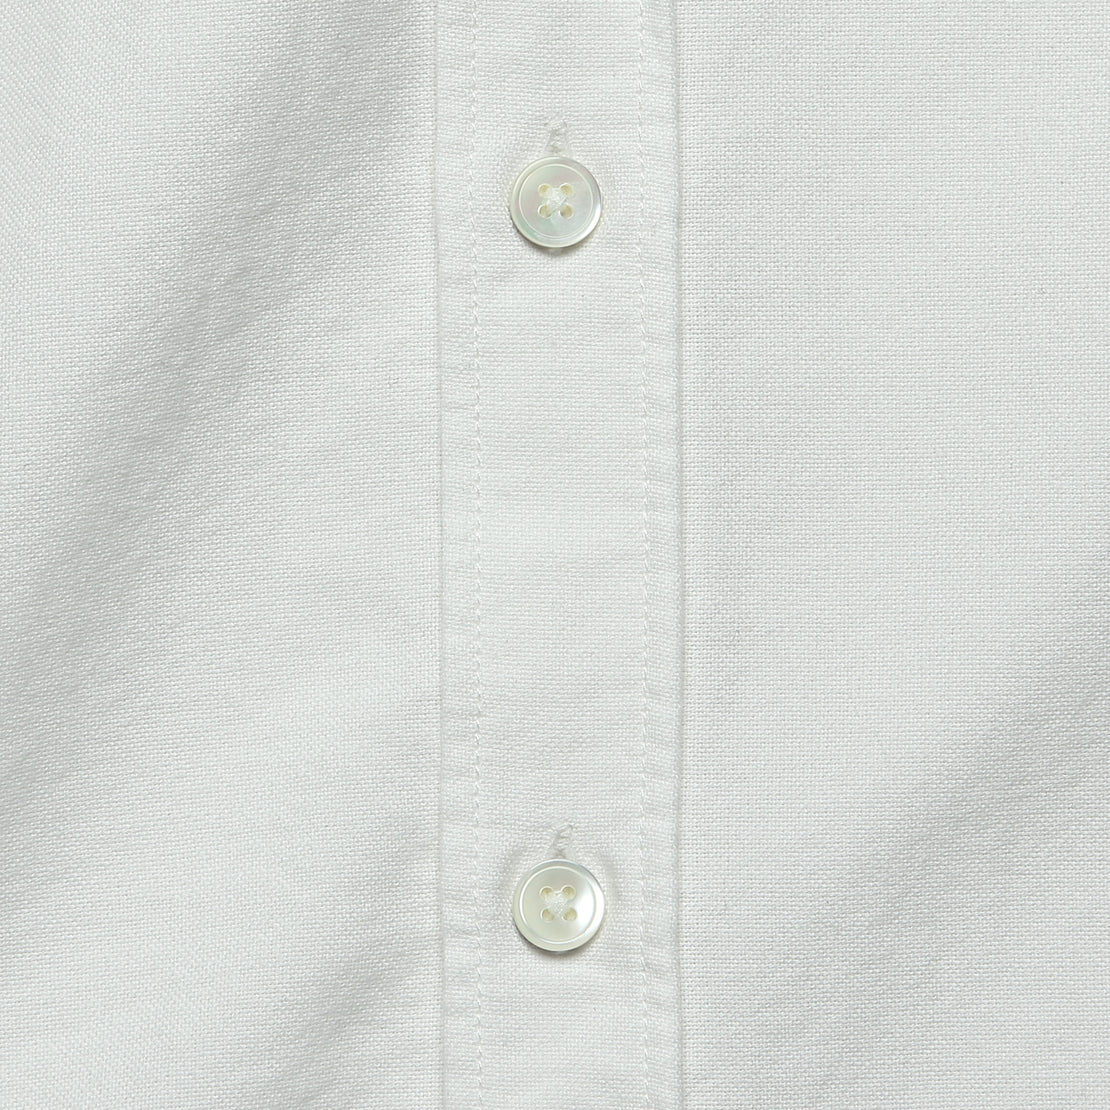 Belavista Oxford Shirt - Off White - Portuguese Flannel - STAG Provisions - Tops - L/S Woven - Solid